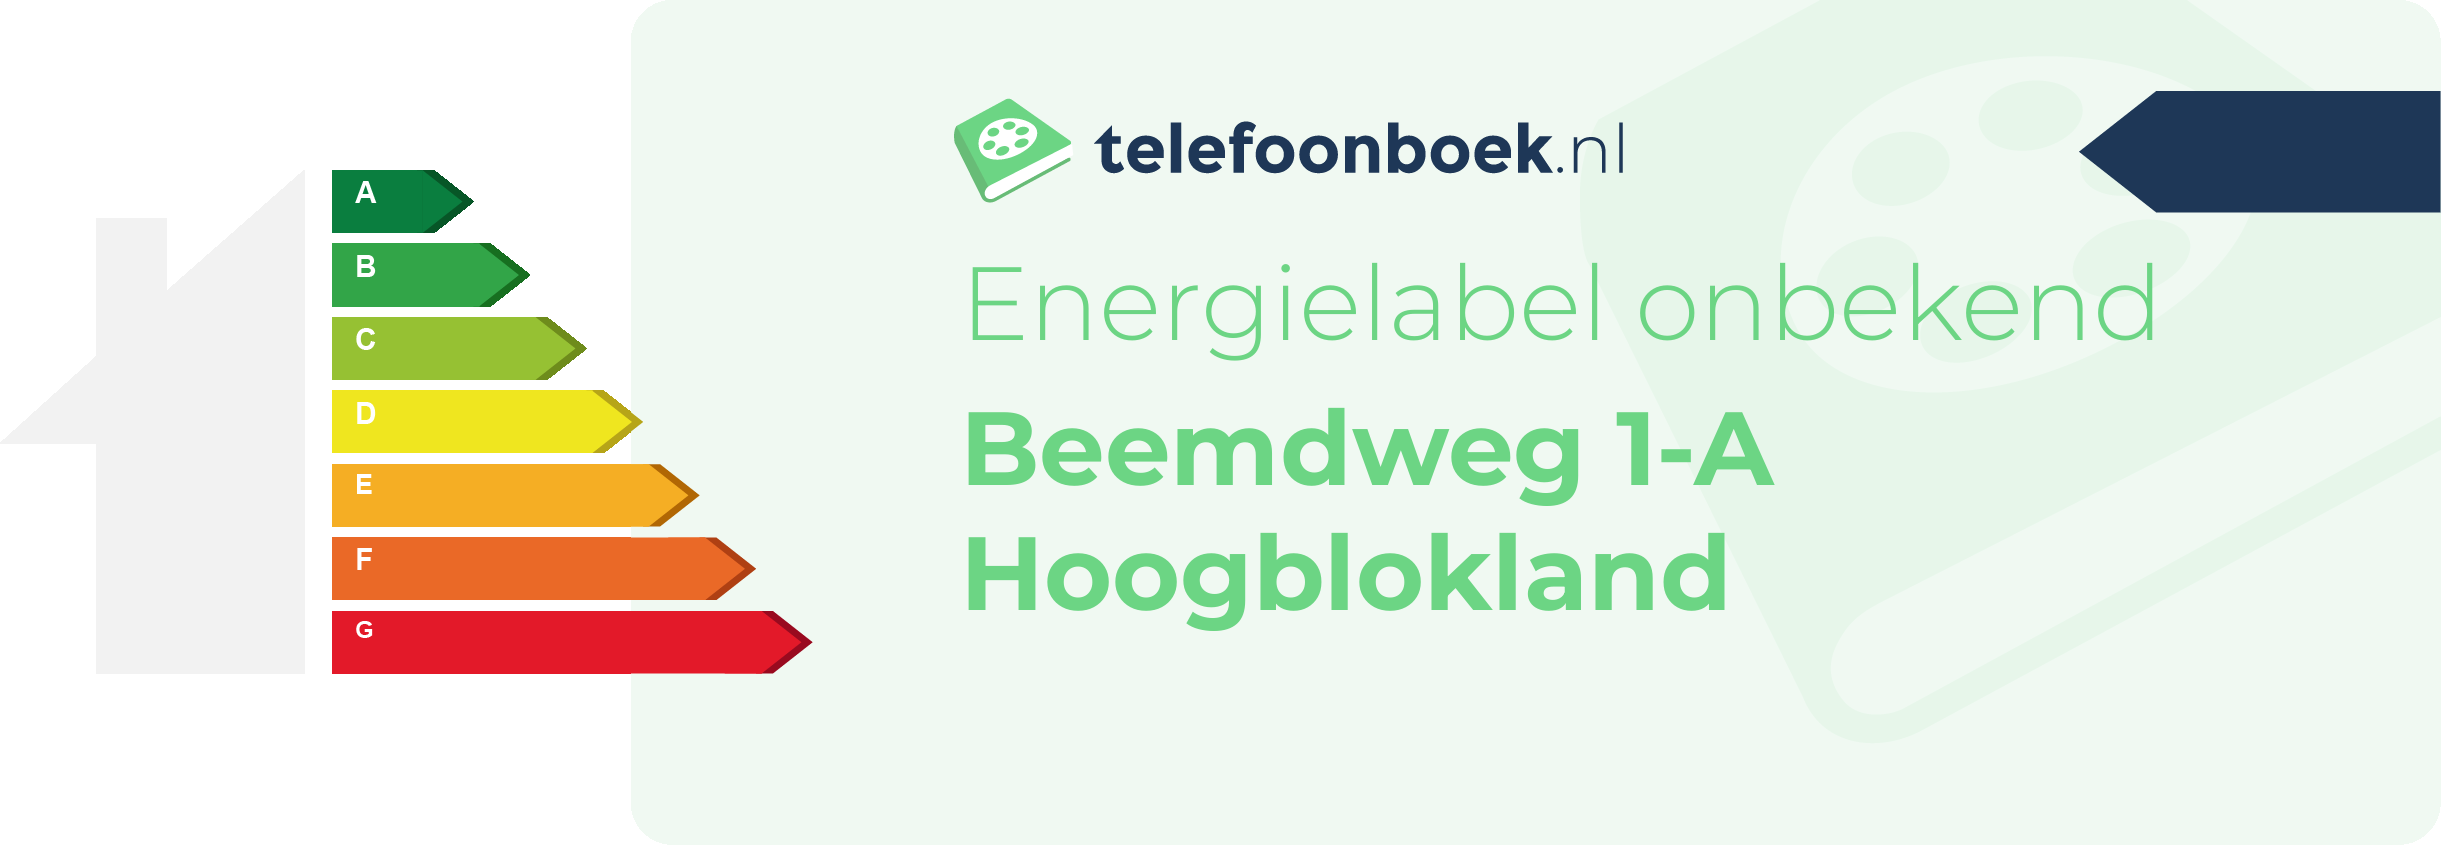 Energielabel Beemdweg 1-A Hoogblokland